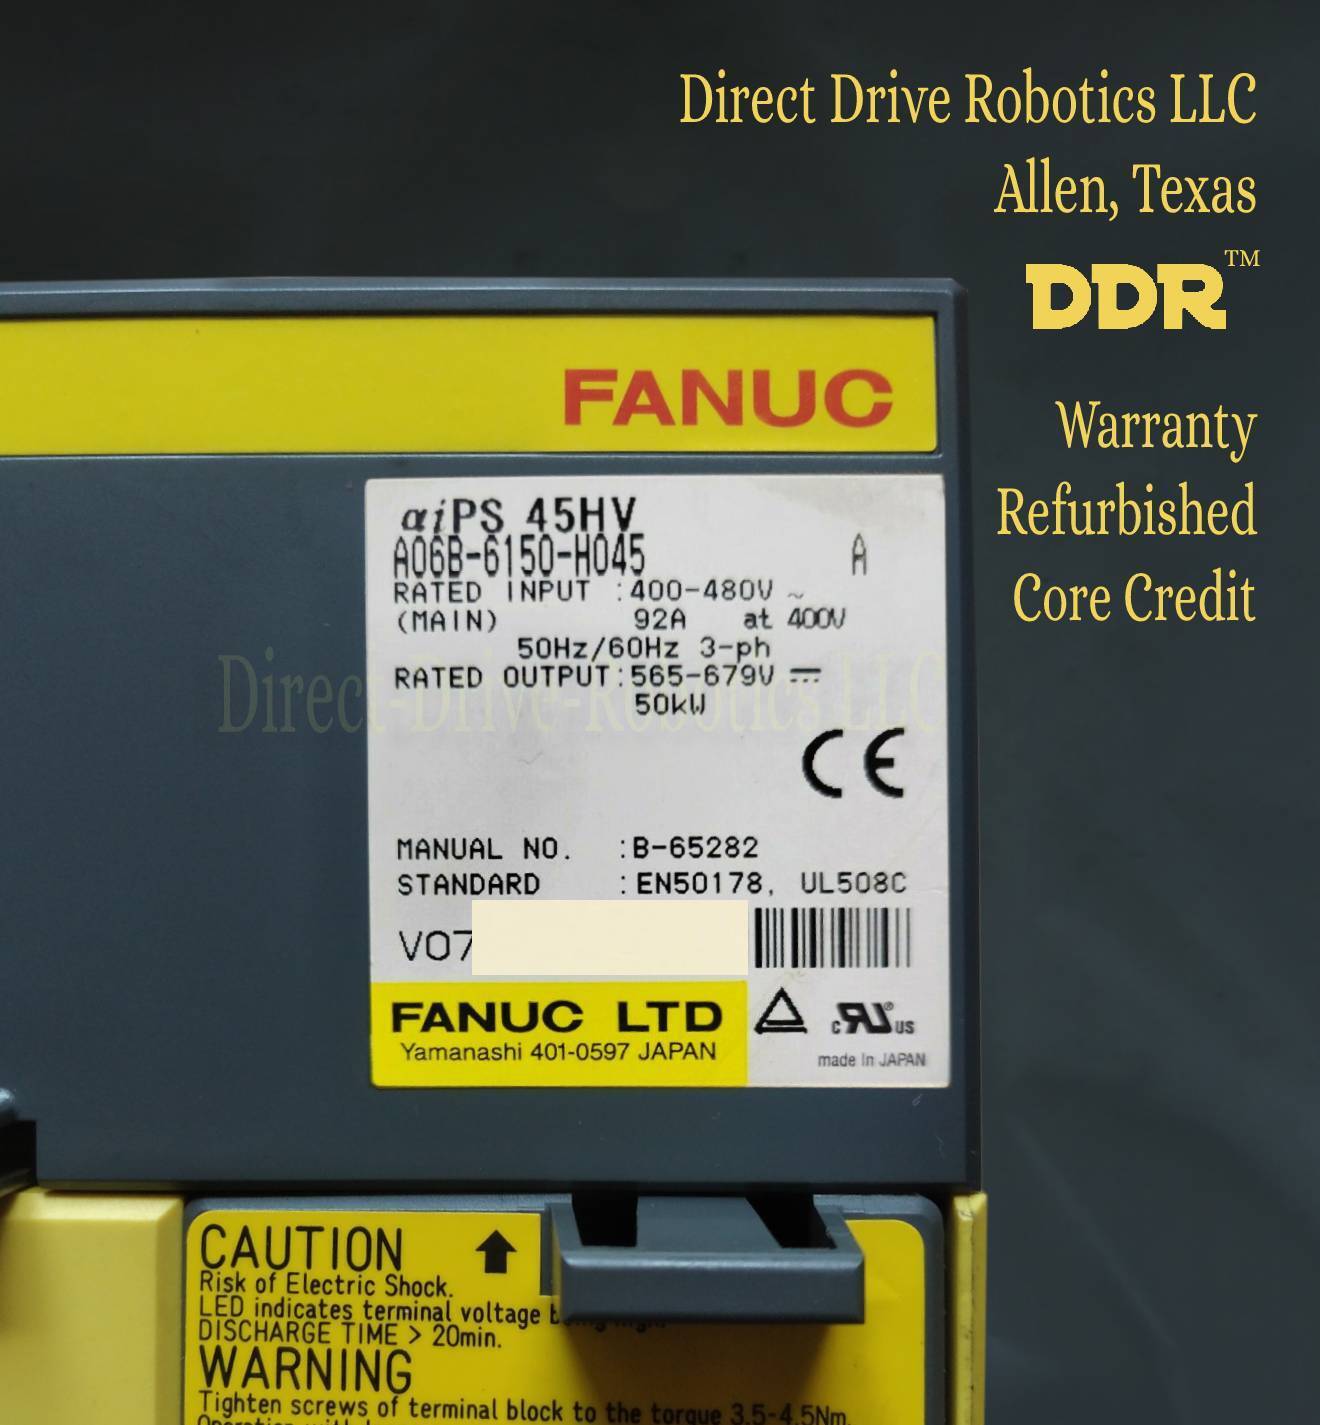 1pcs A06B-6150-H045 Fanuc Servo drive amplifier Brand new unused DHL shipping